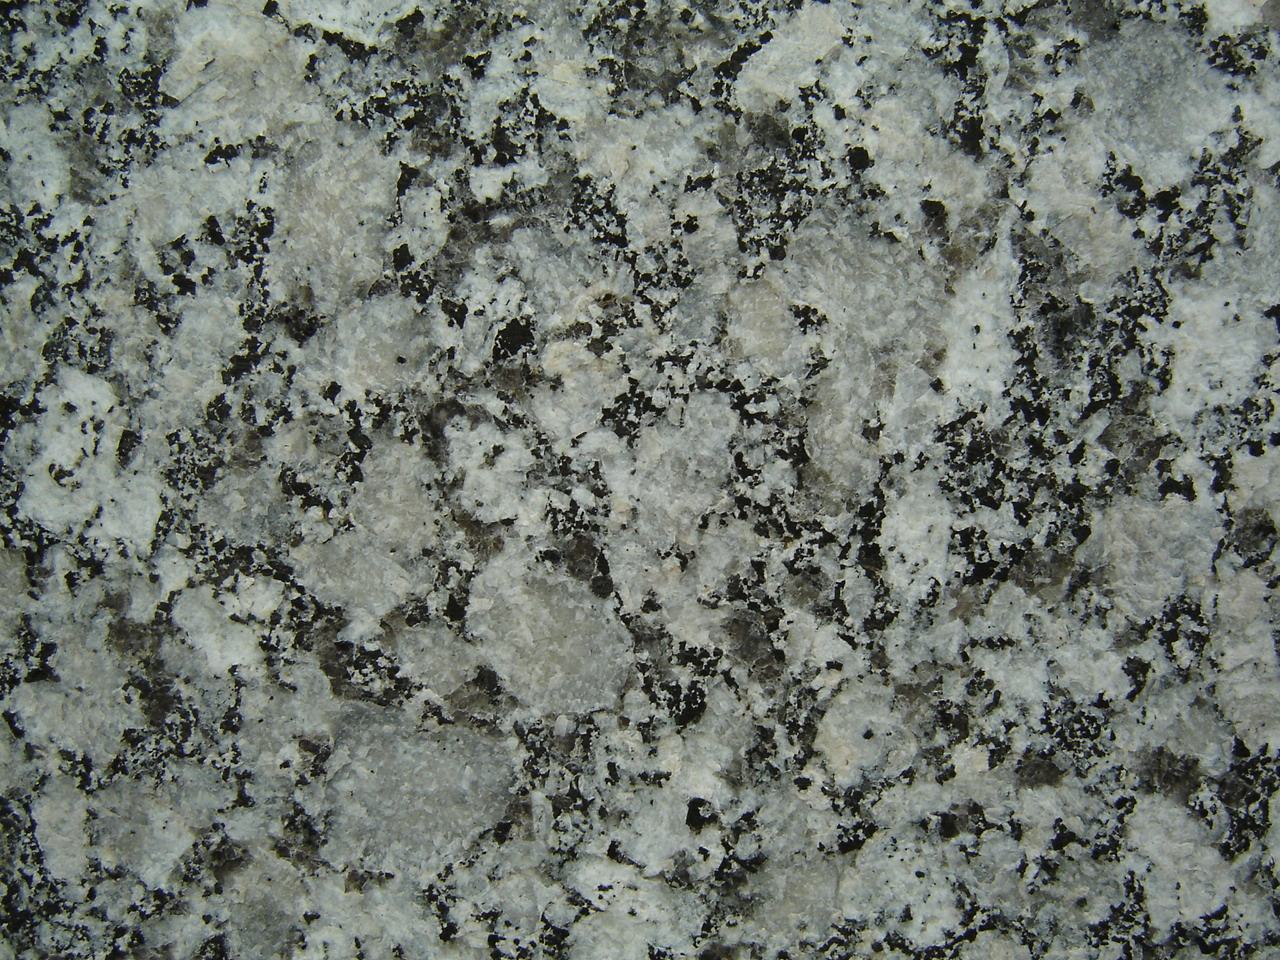 Earthscienceguy Minnesota Geology Monday Granites Of The St